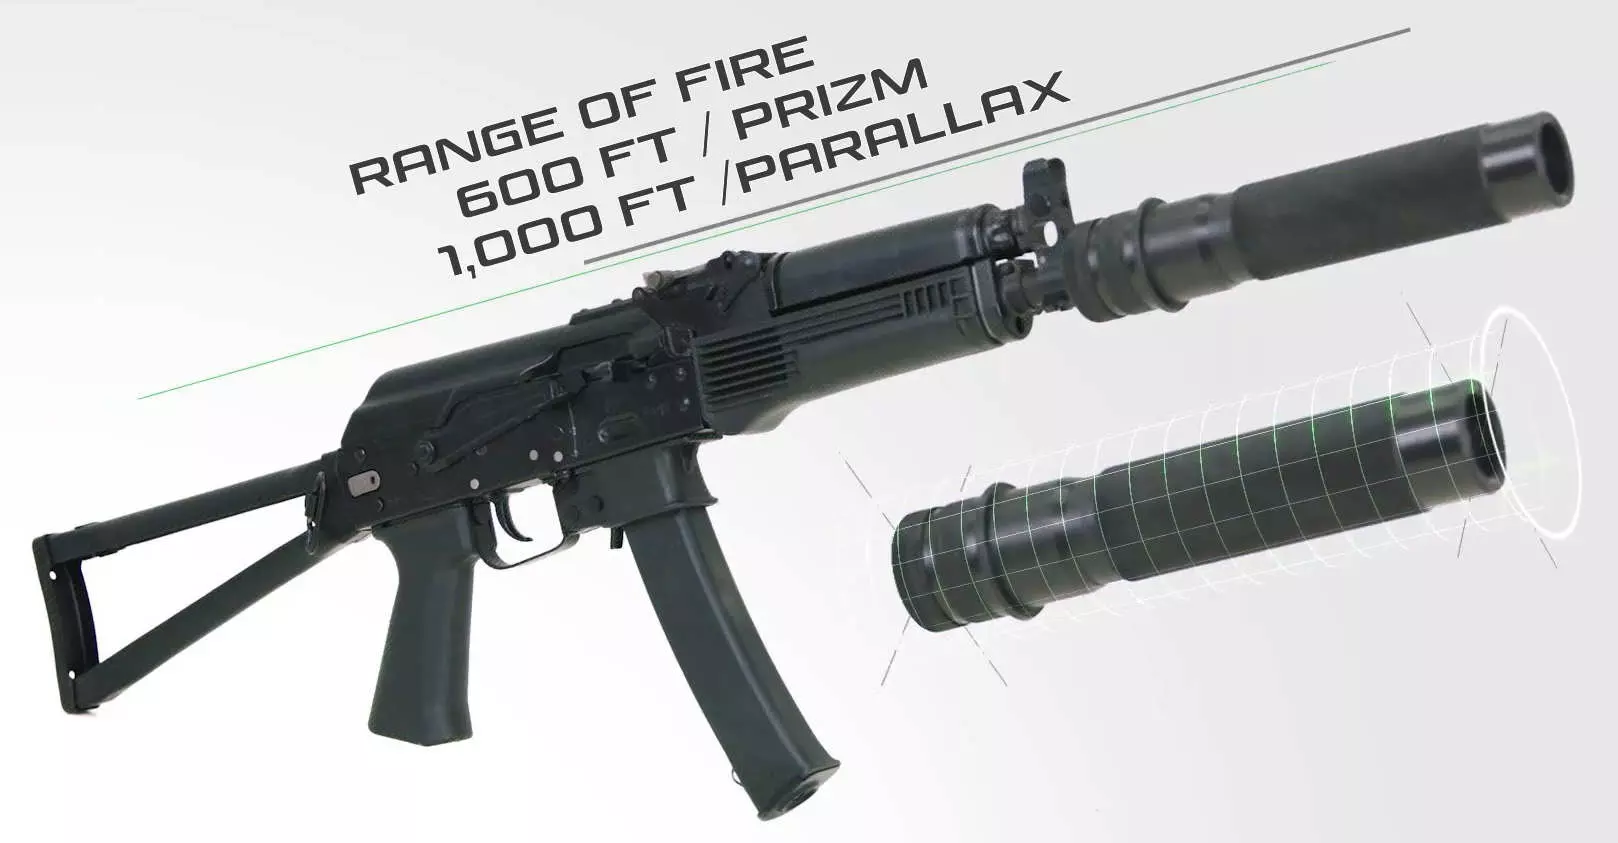 PP-19-01-laser-tag-pistol-carbine-fire-range.jpg